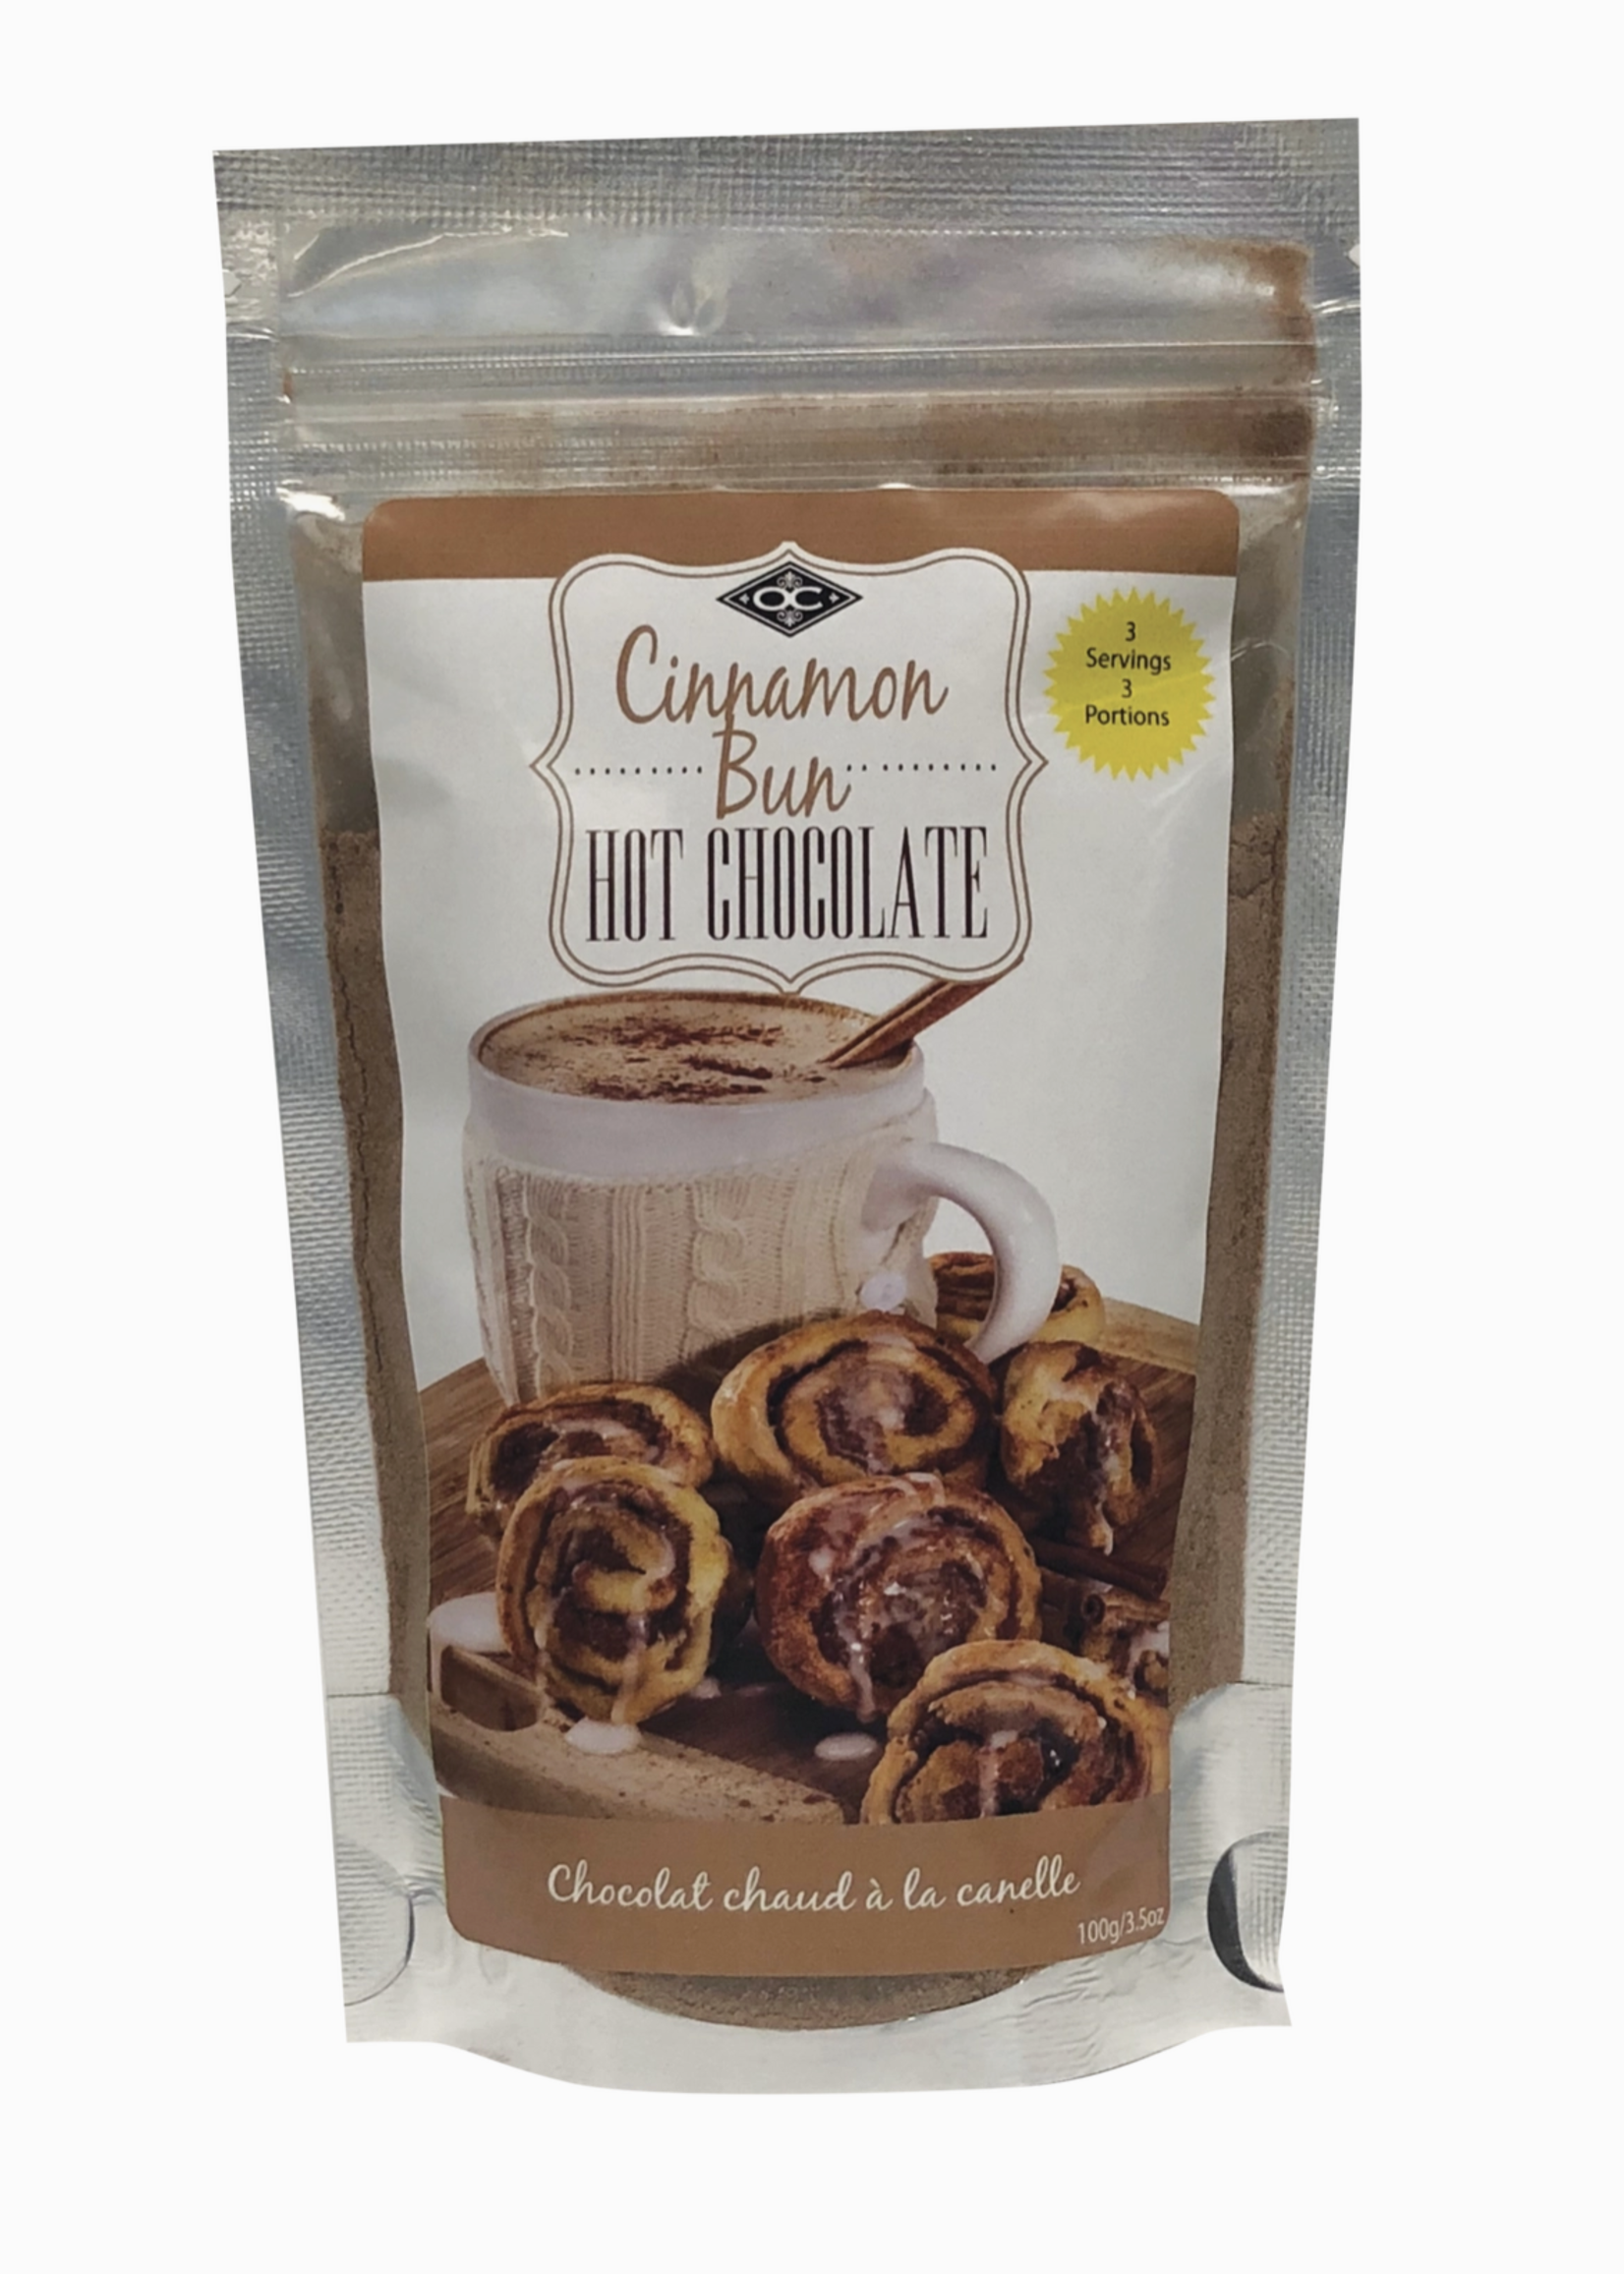 OCF Cinnamon Bun Hot Chocolate